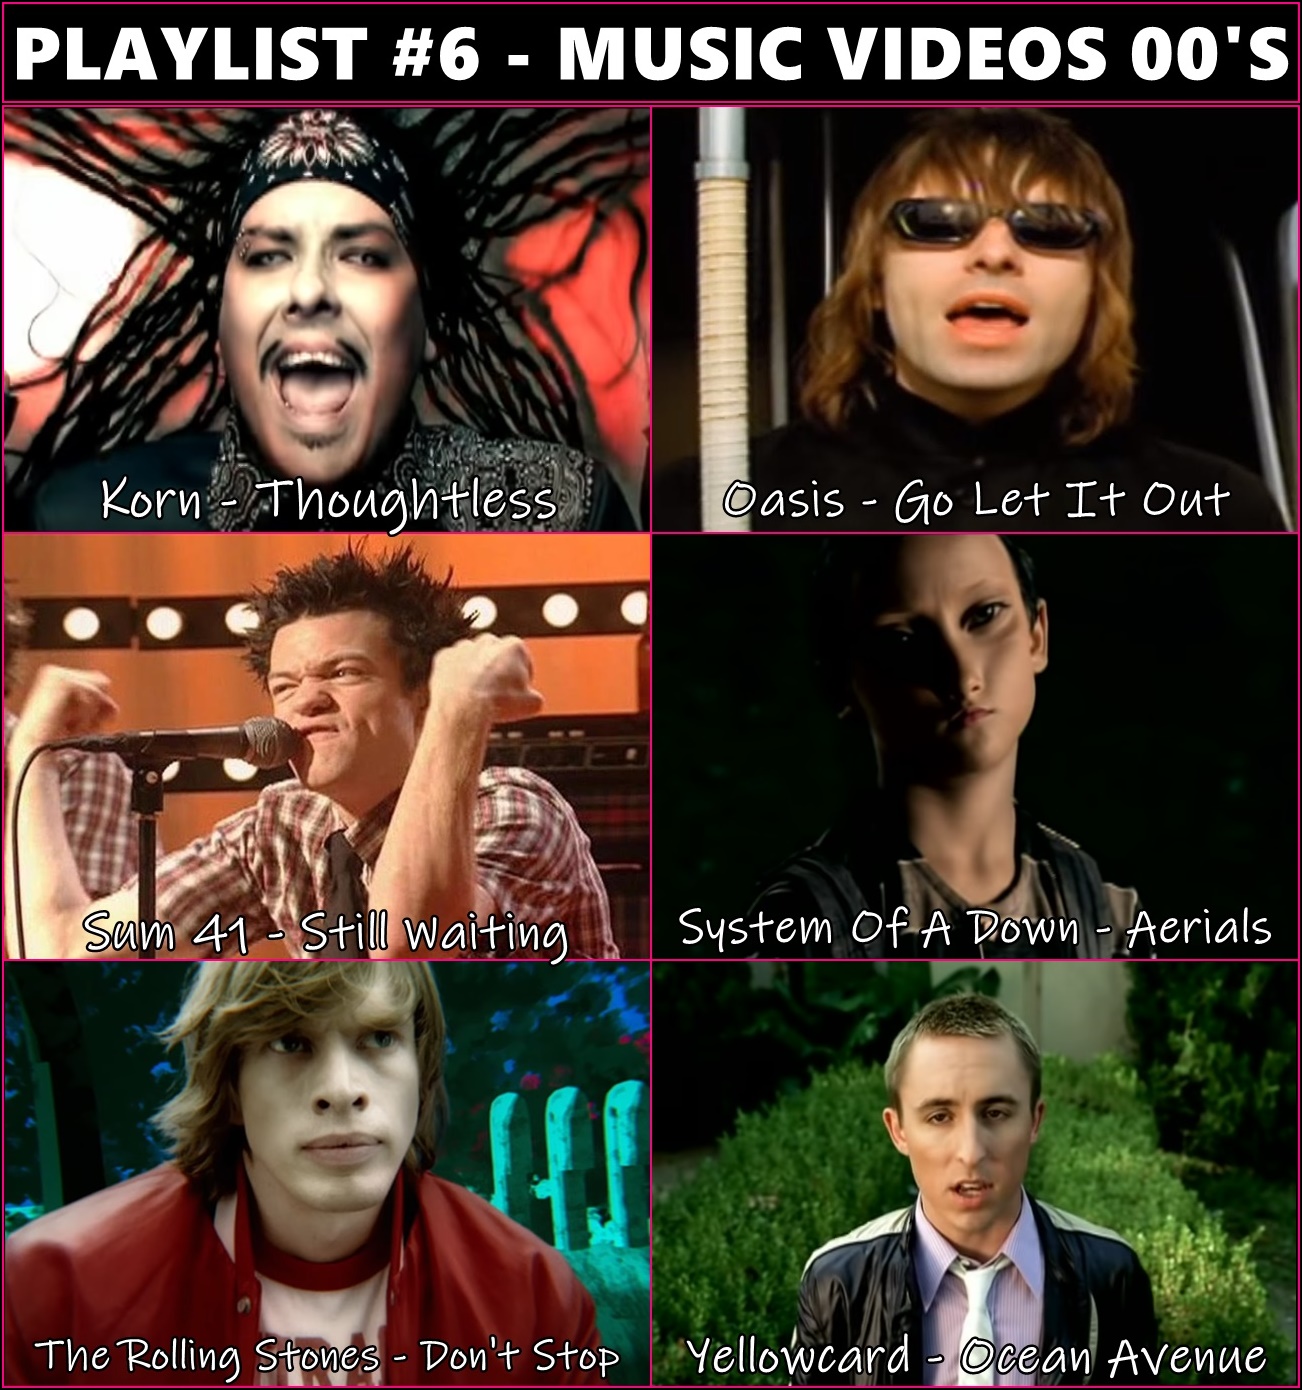 Music videos by sum 41